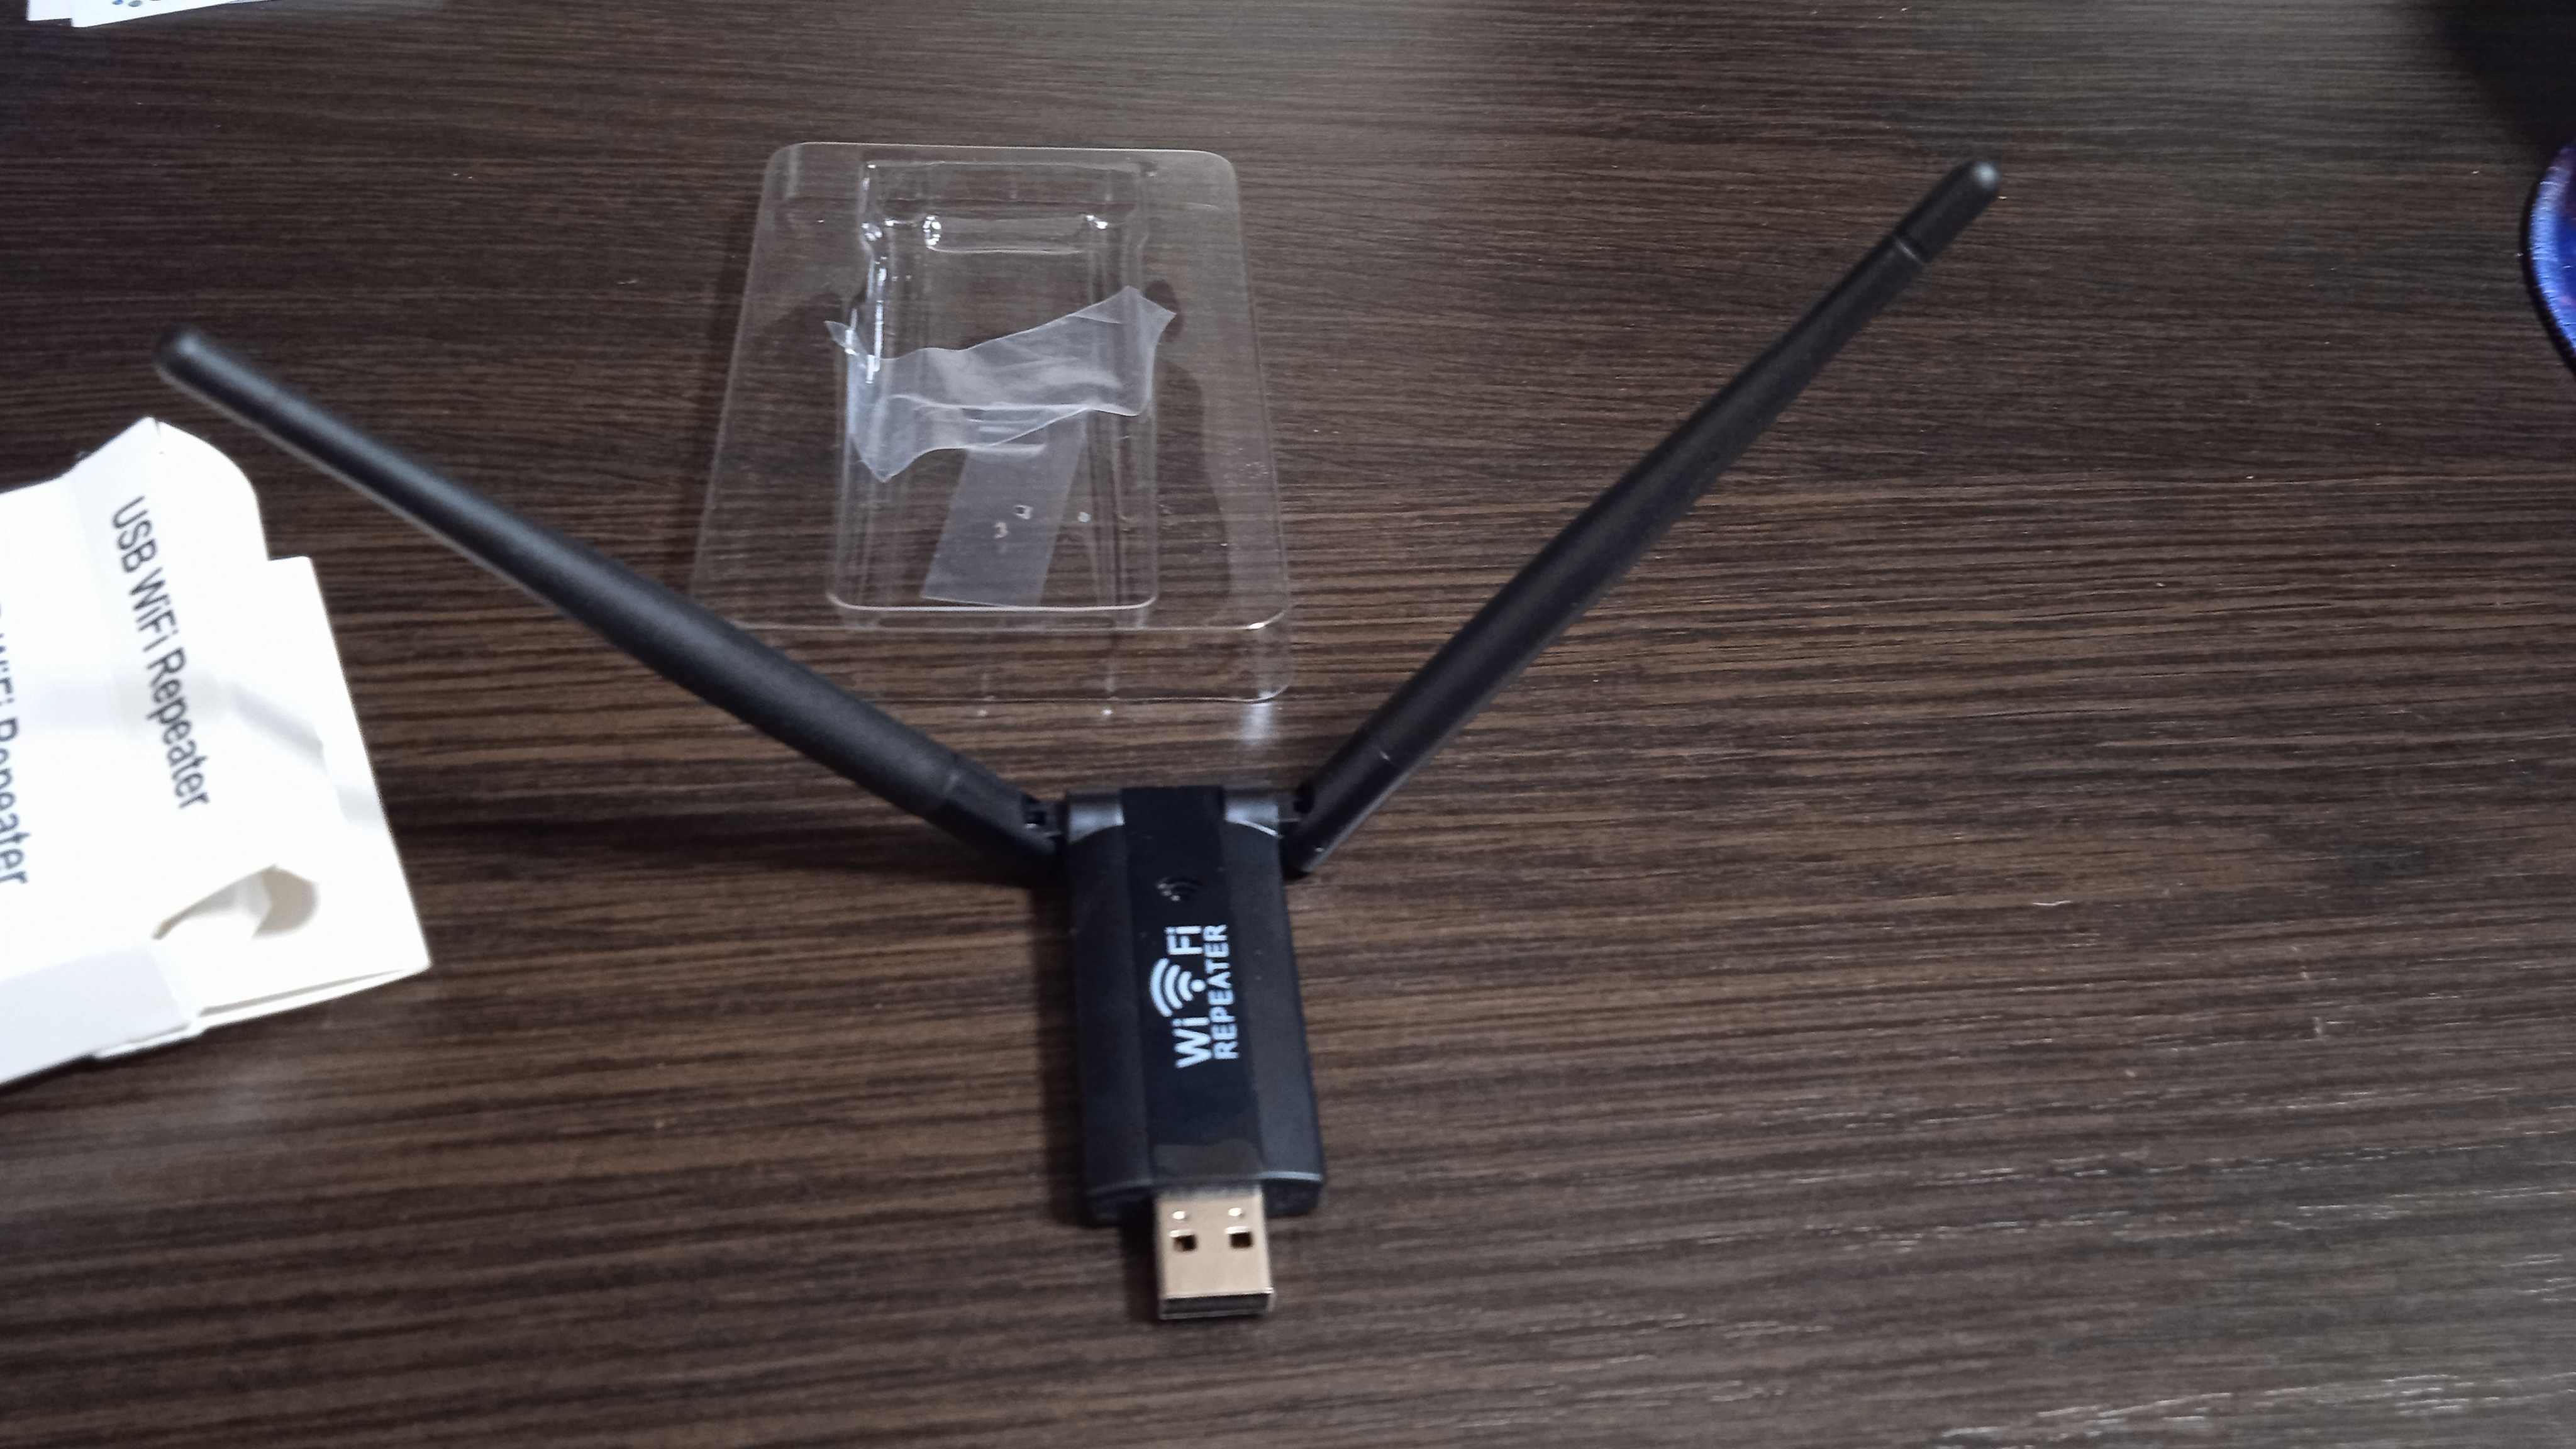 USB WiFi адаптер